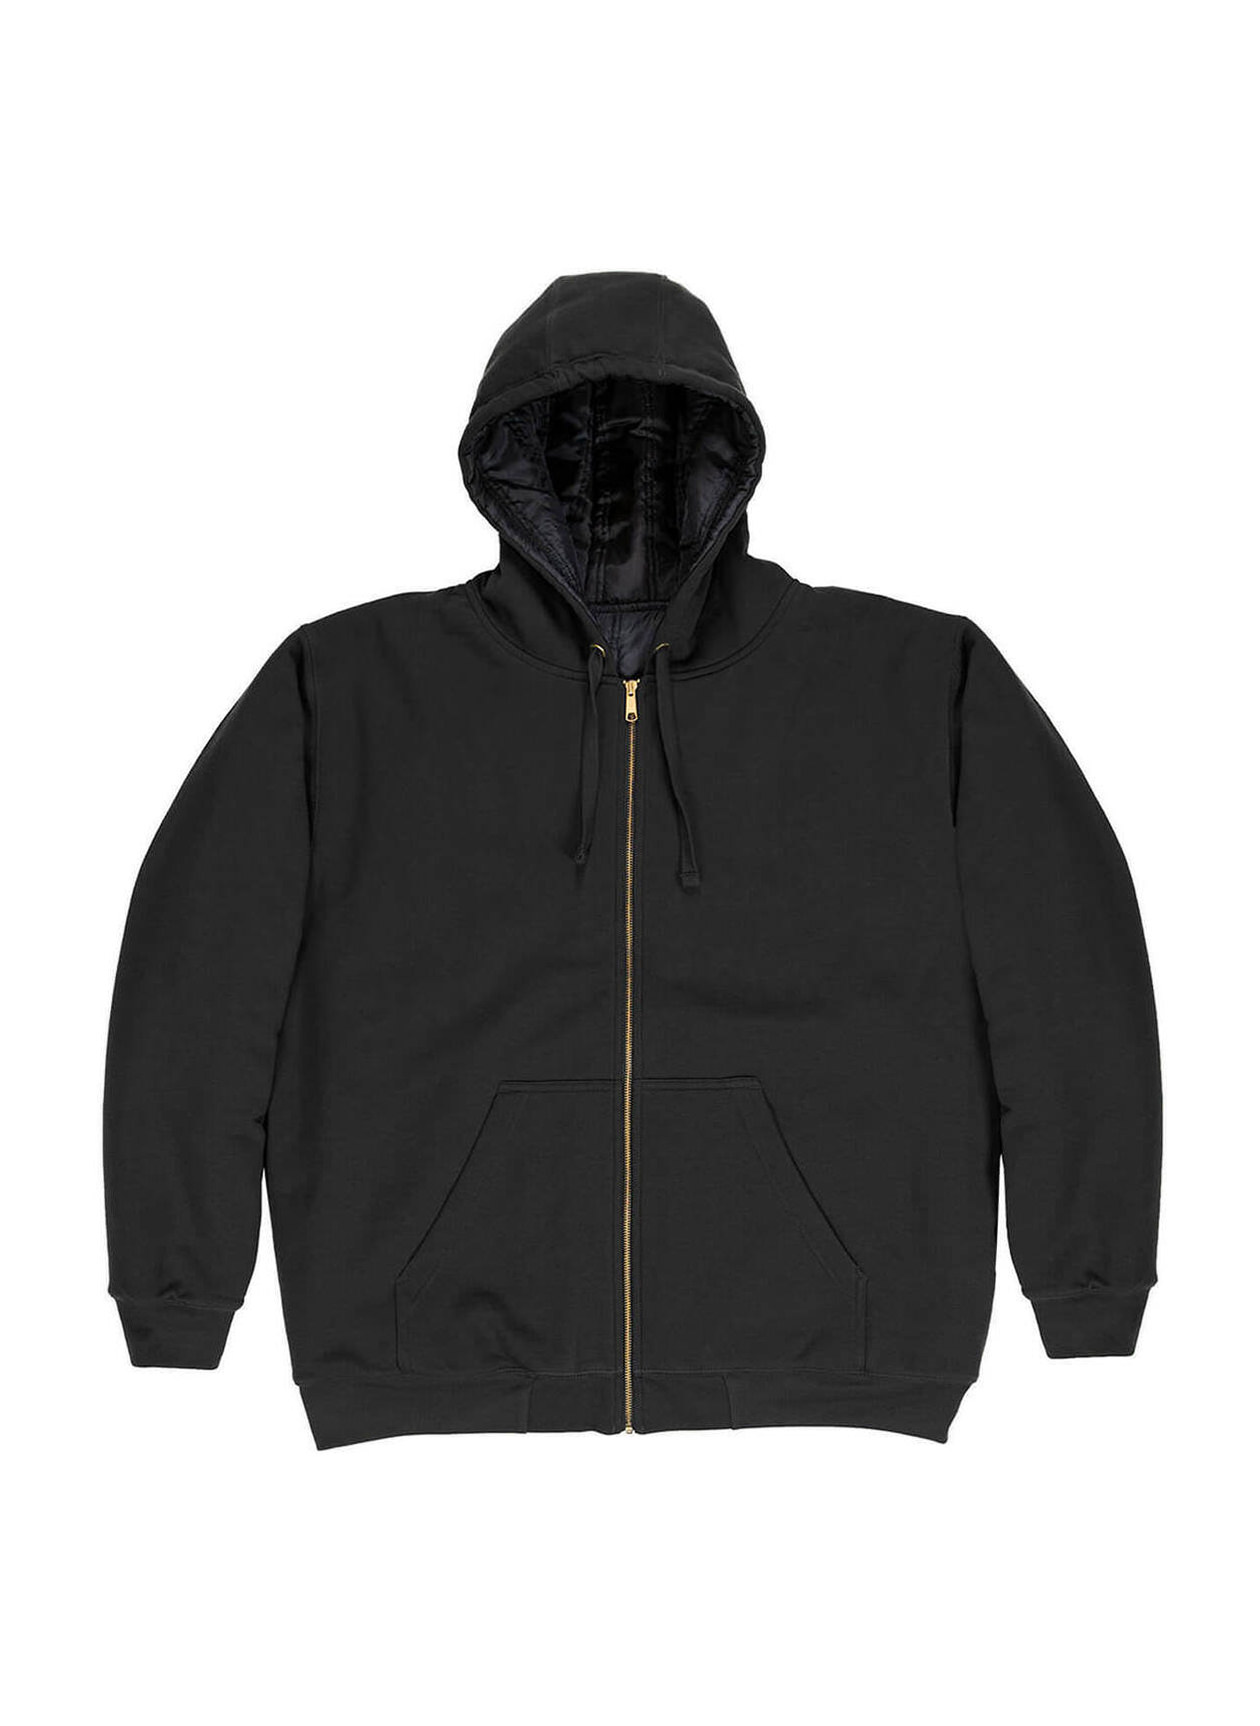 Berne Men's Black Glacier Full-Zip Hooded Jacket